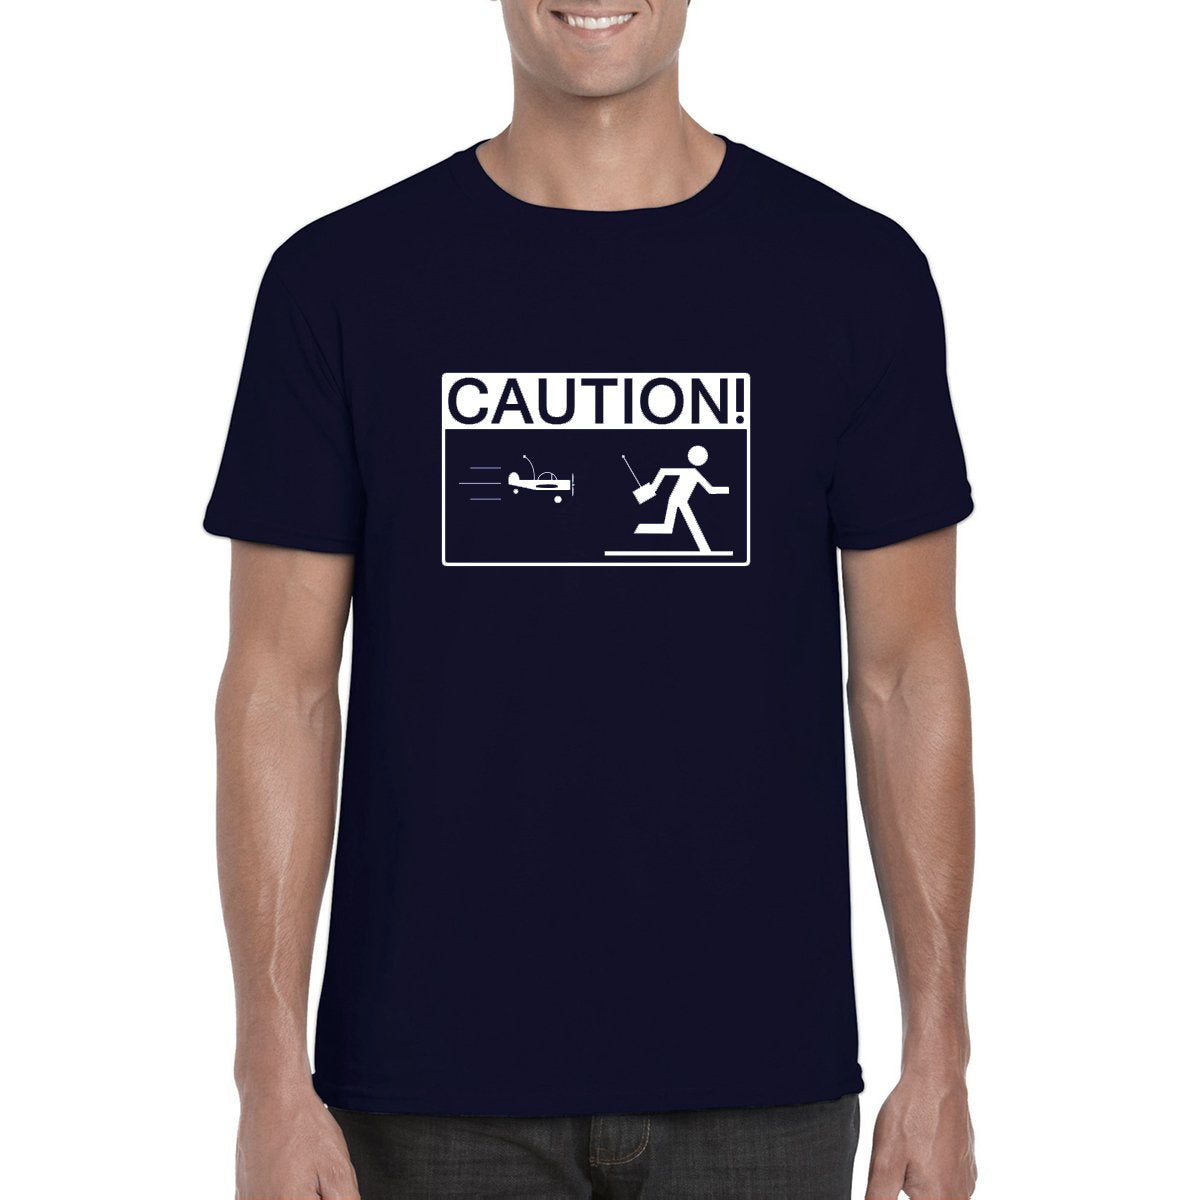 CAUTION! AEROMODELLER T-Shirt